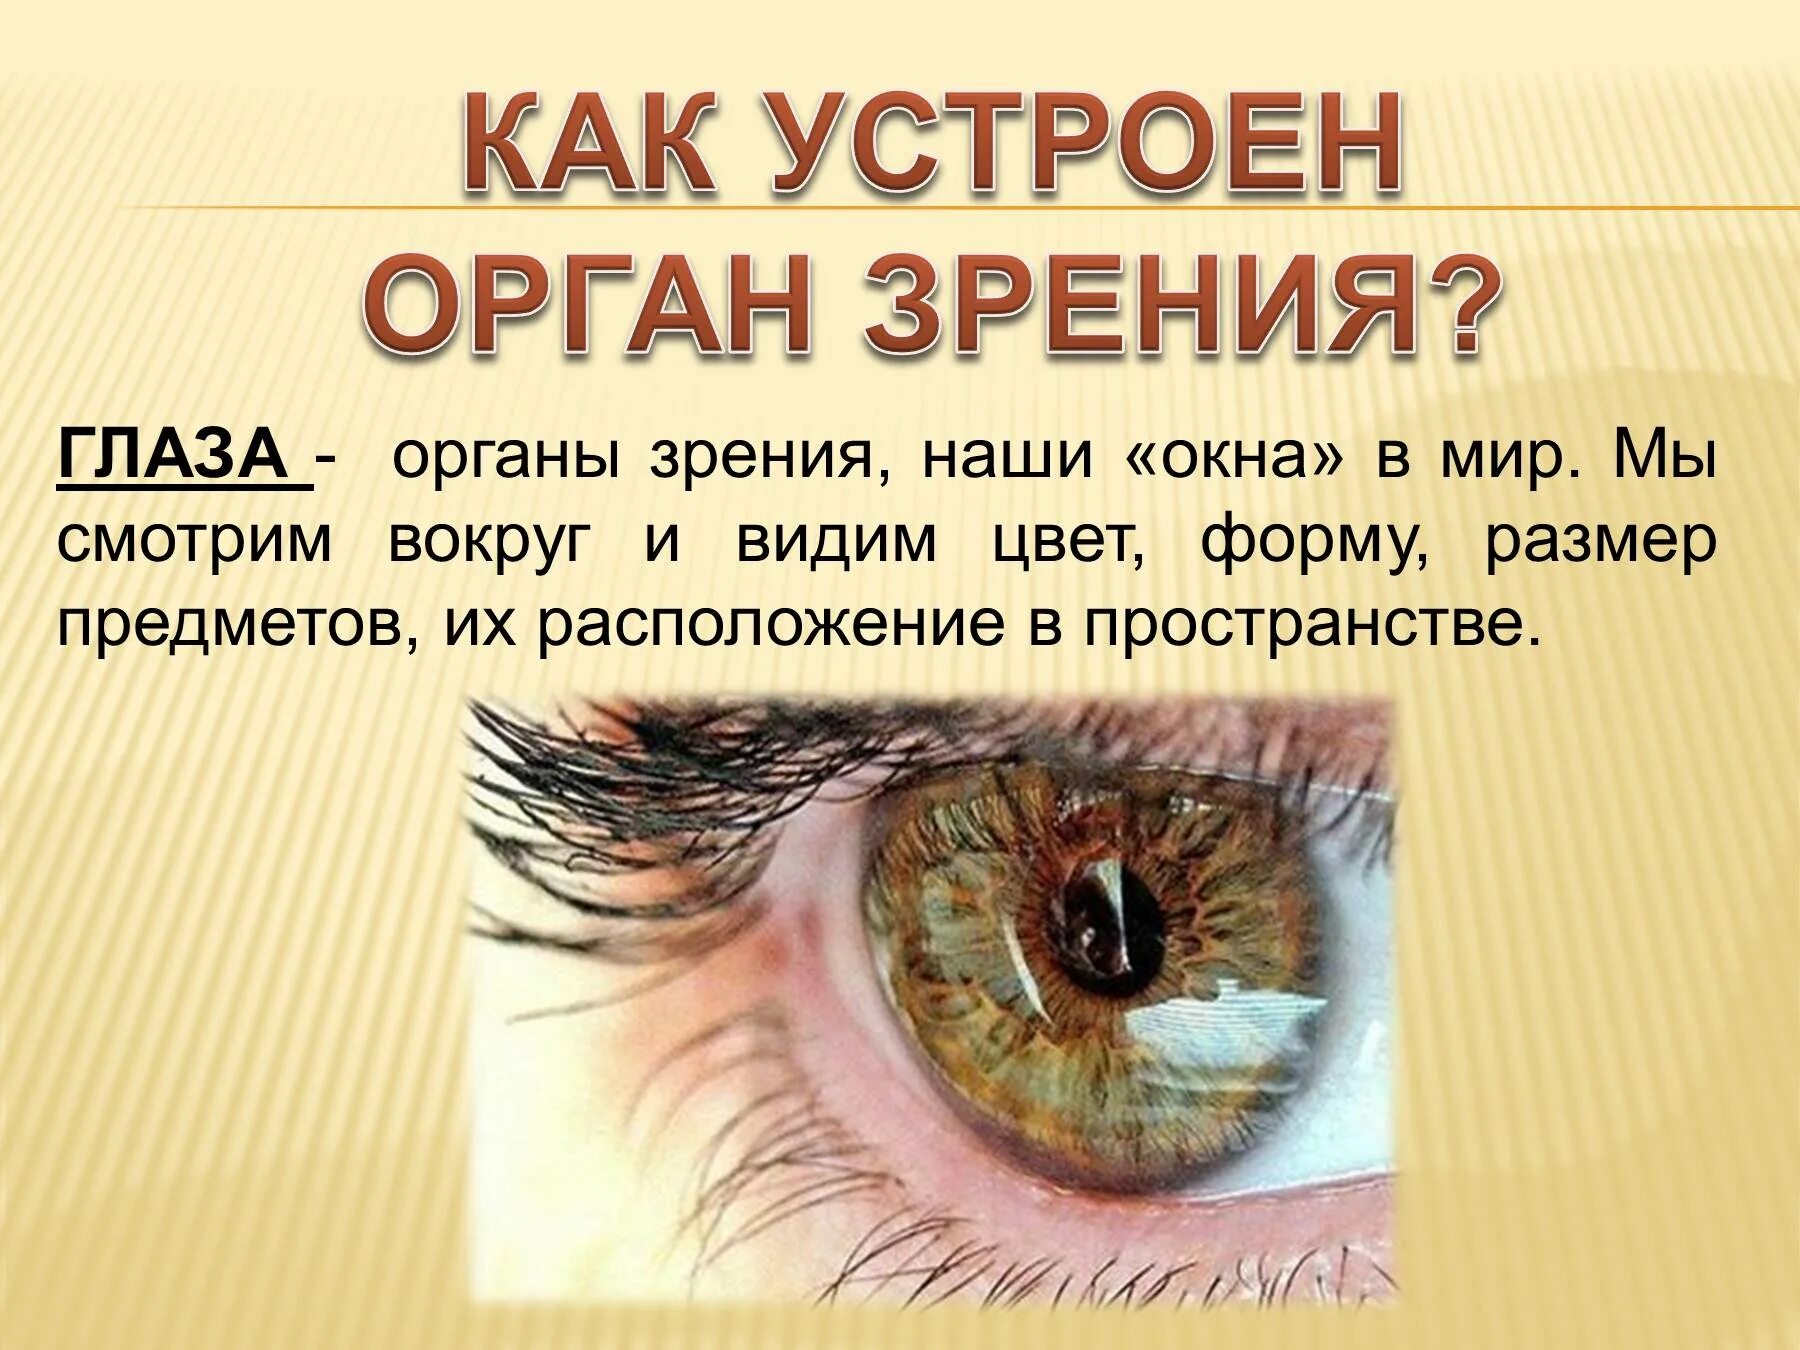 Орган зрения презентация. Презентация на тему глаз. Презентация на тему органы зрения. Презентация на тему зрение человека.